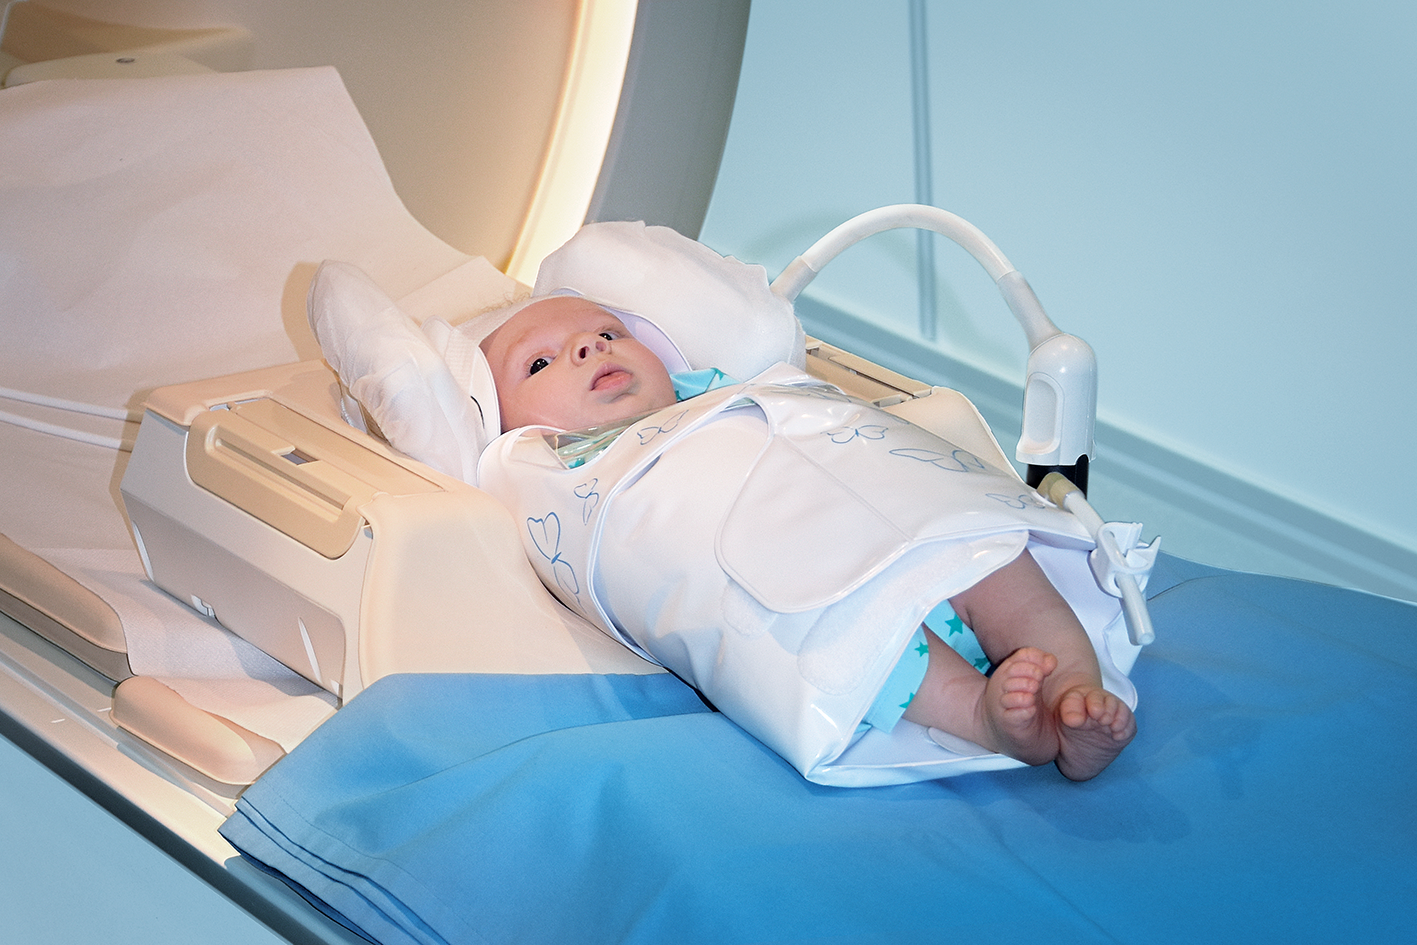 Newborn wrapped in BabyFix Cocoon lying in MRI head-coil